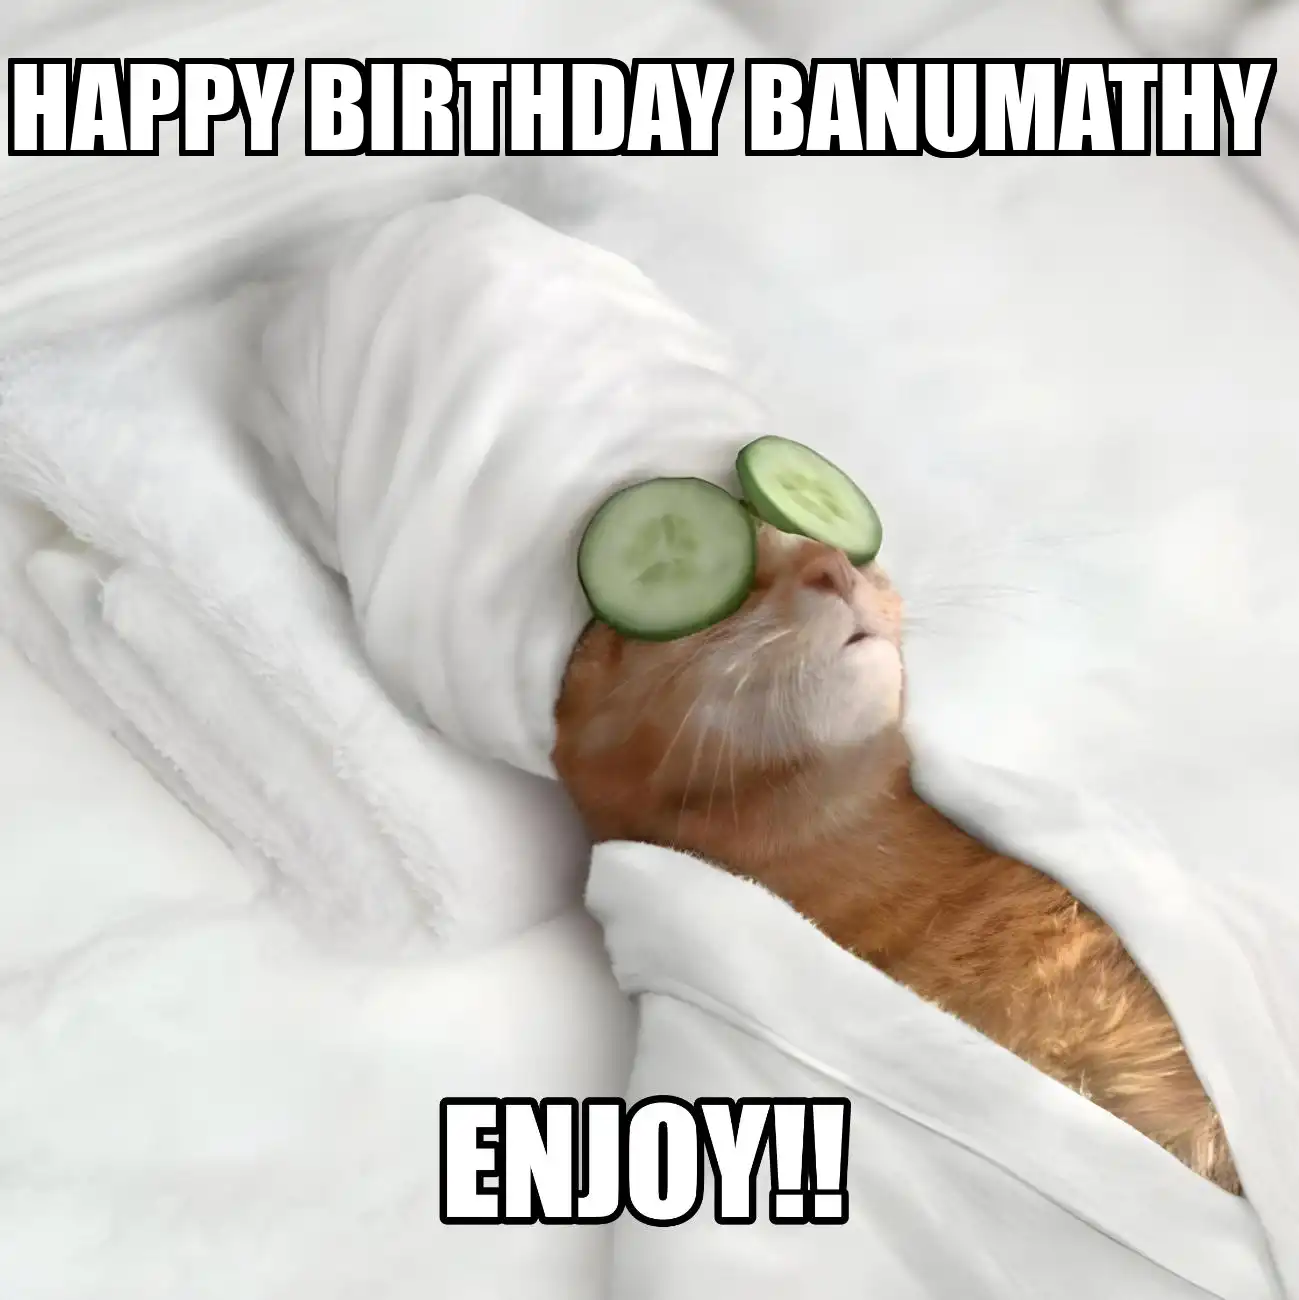 Happy Birthday Banumathy Enjoy Cat Meme